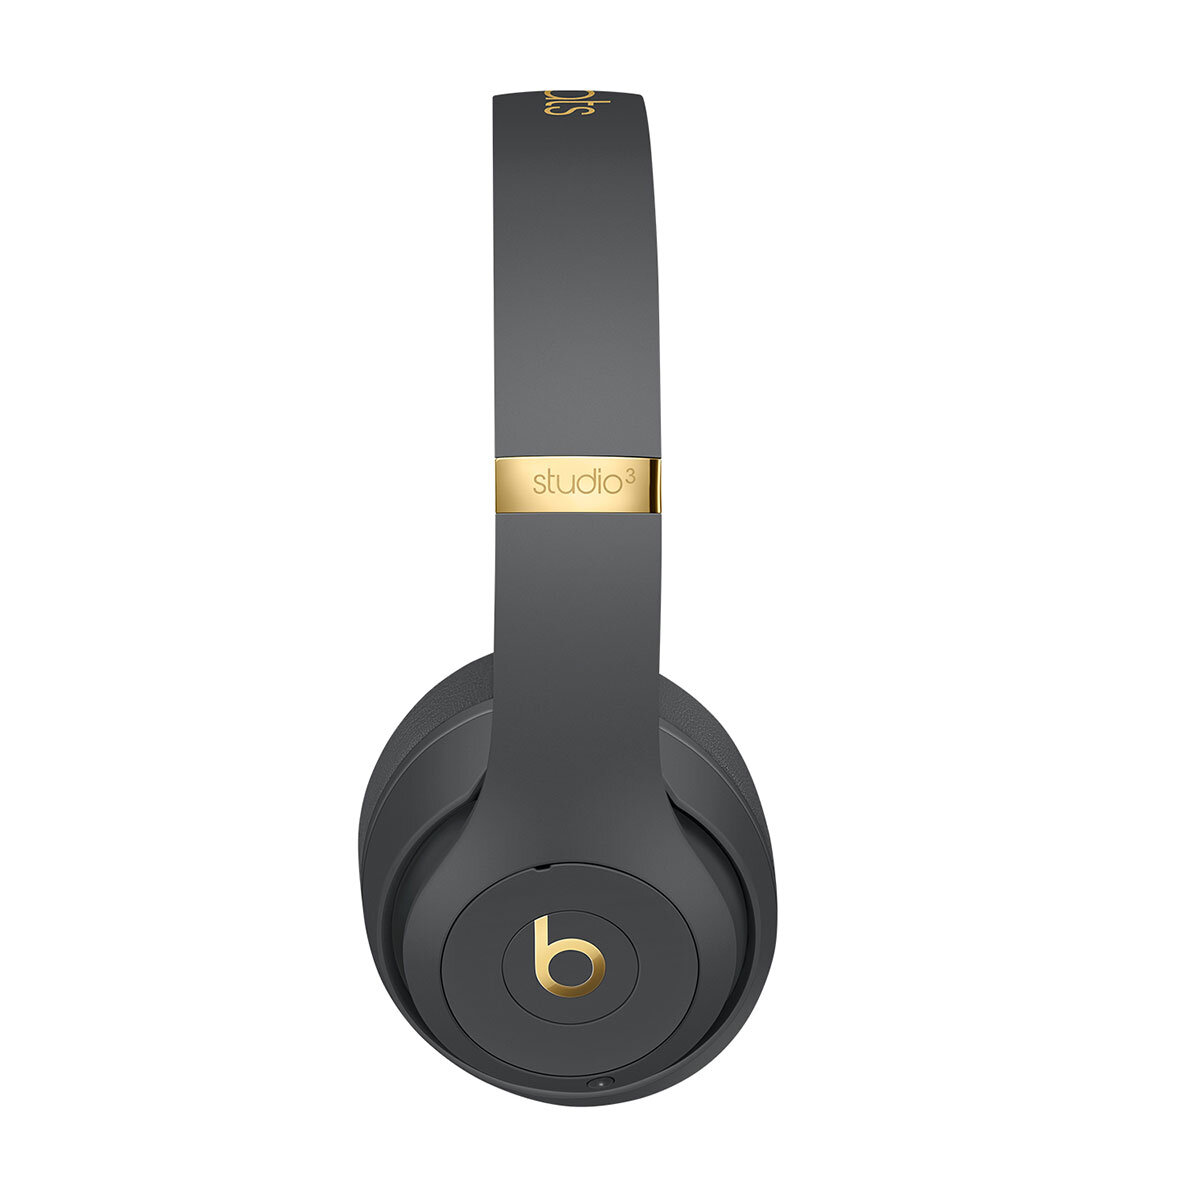 Buy Beats Studio3 Wireless Headphones – The Beats Skyline Collection in Shadow Grey, MXJ92ZM/A at costco.co.uk